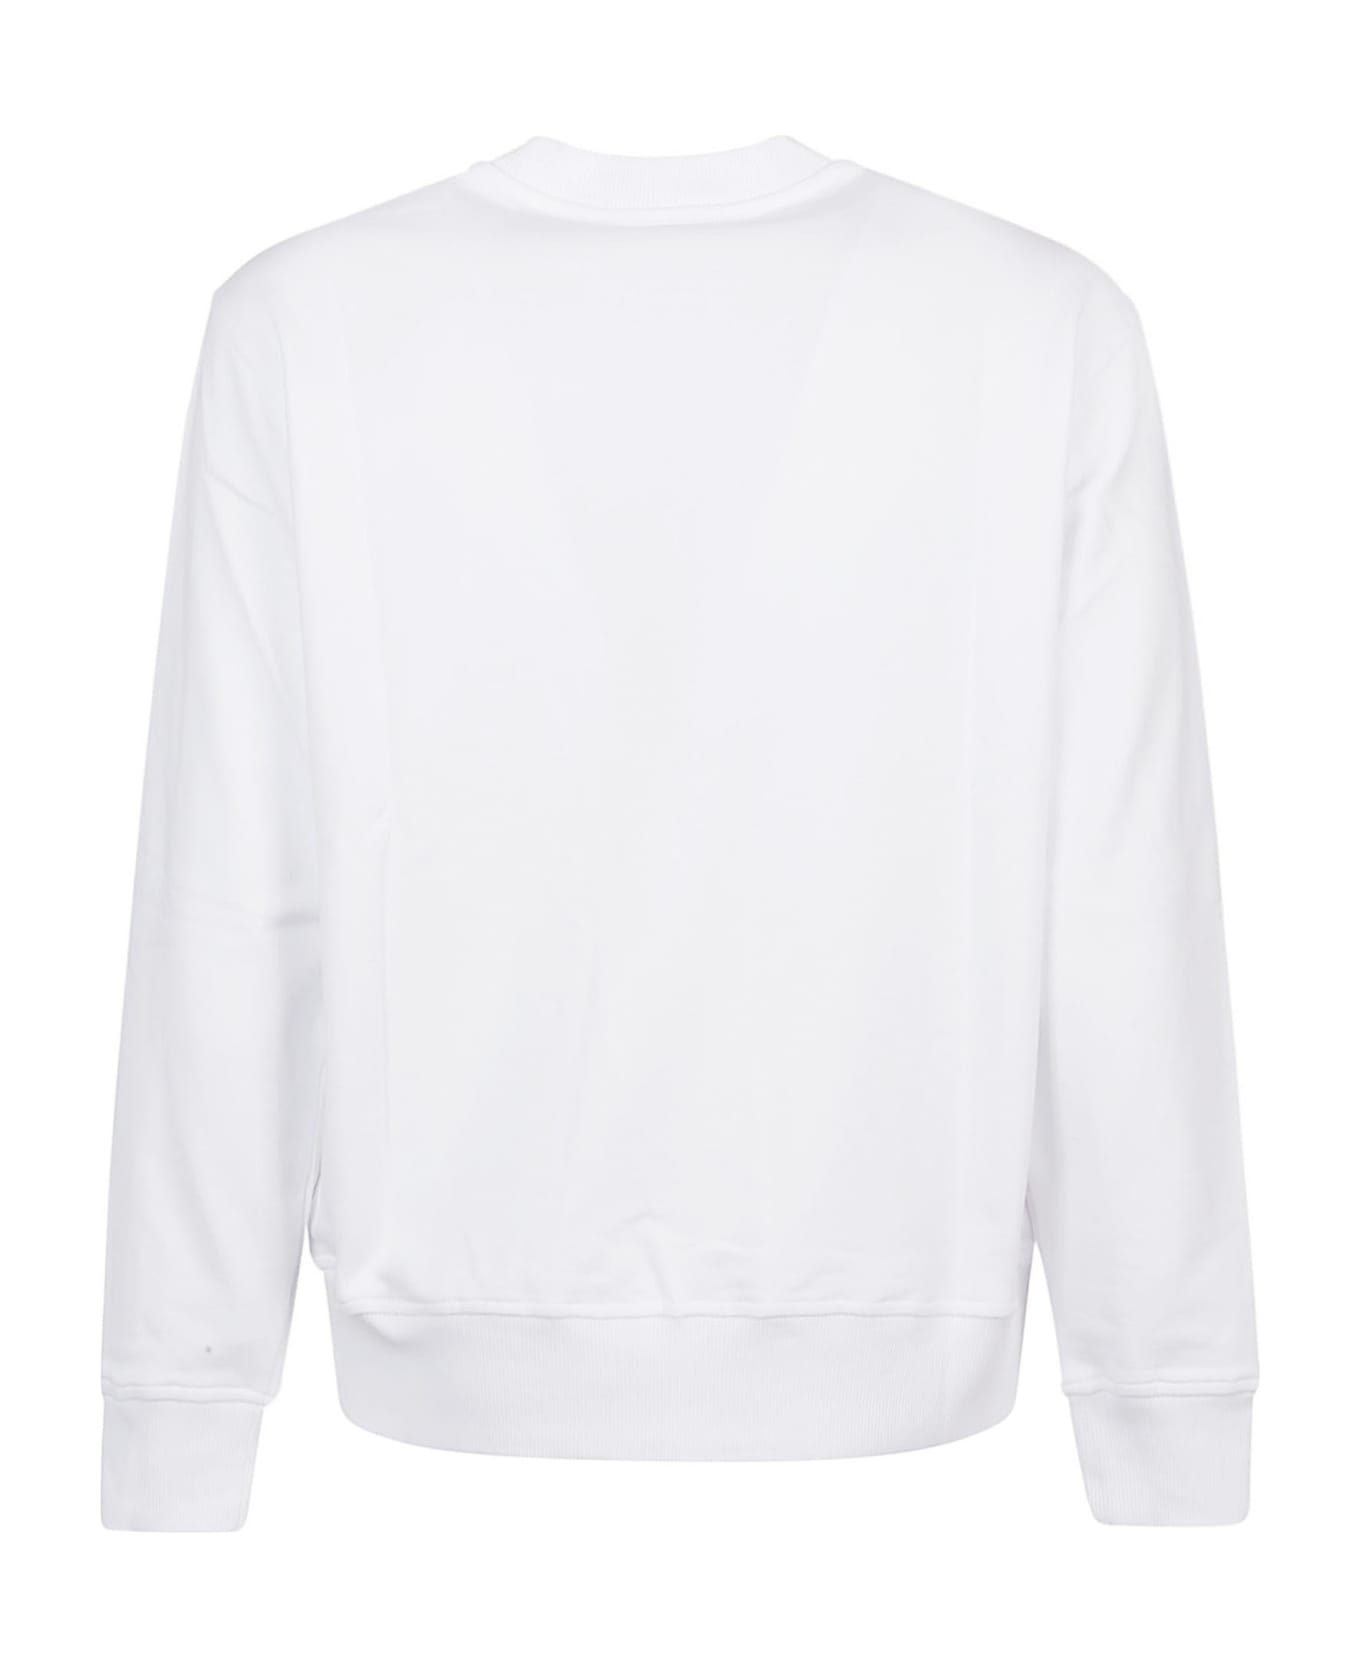 Versace Jeans Couture Magazine Logo Sweatshirt - White